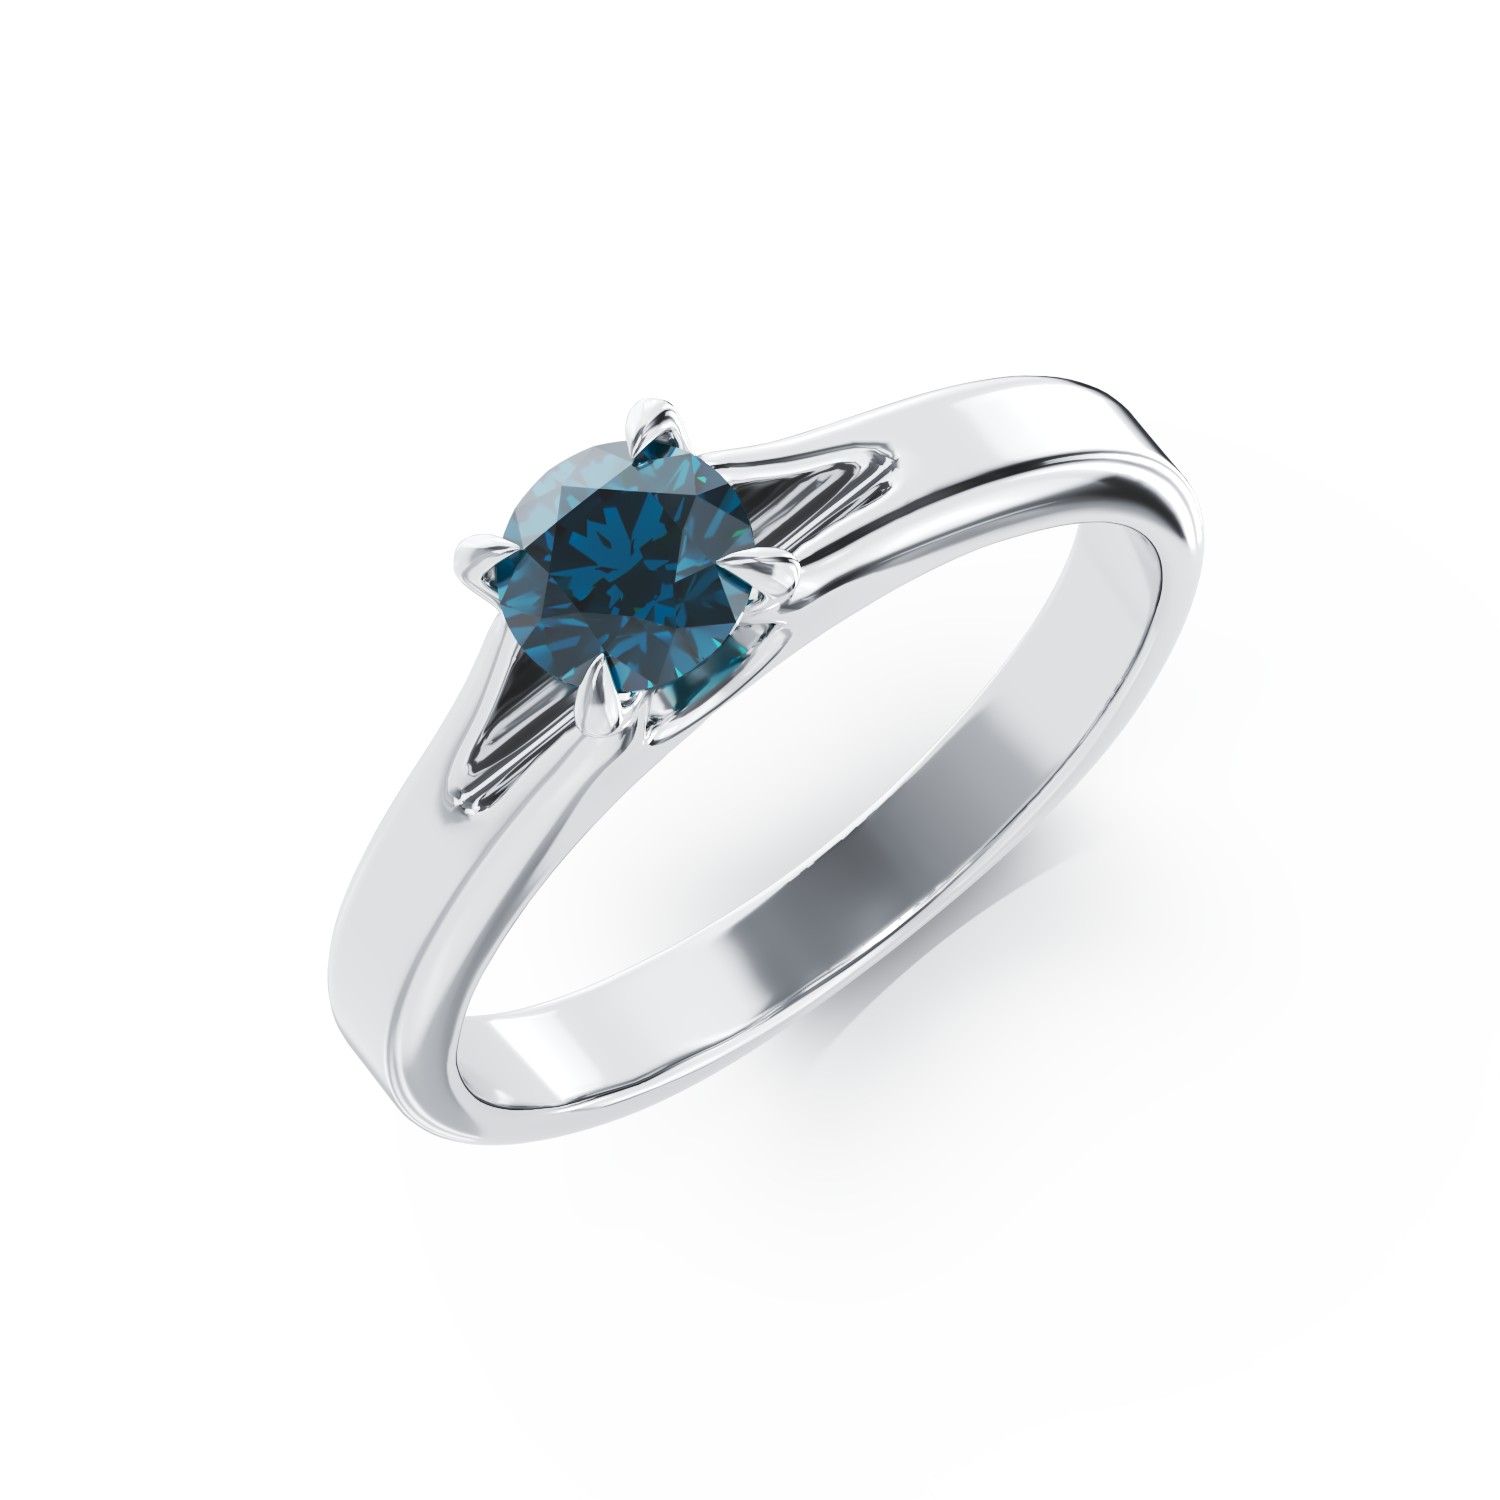 Inel de logodna din aur alb de 18K cu un diamant solitaire albastru de 0.44ct